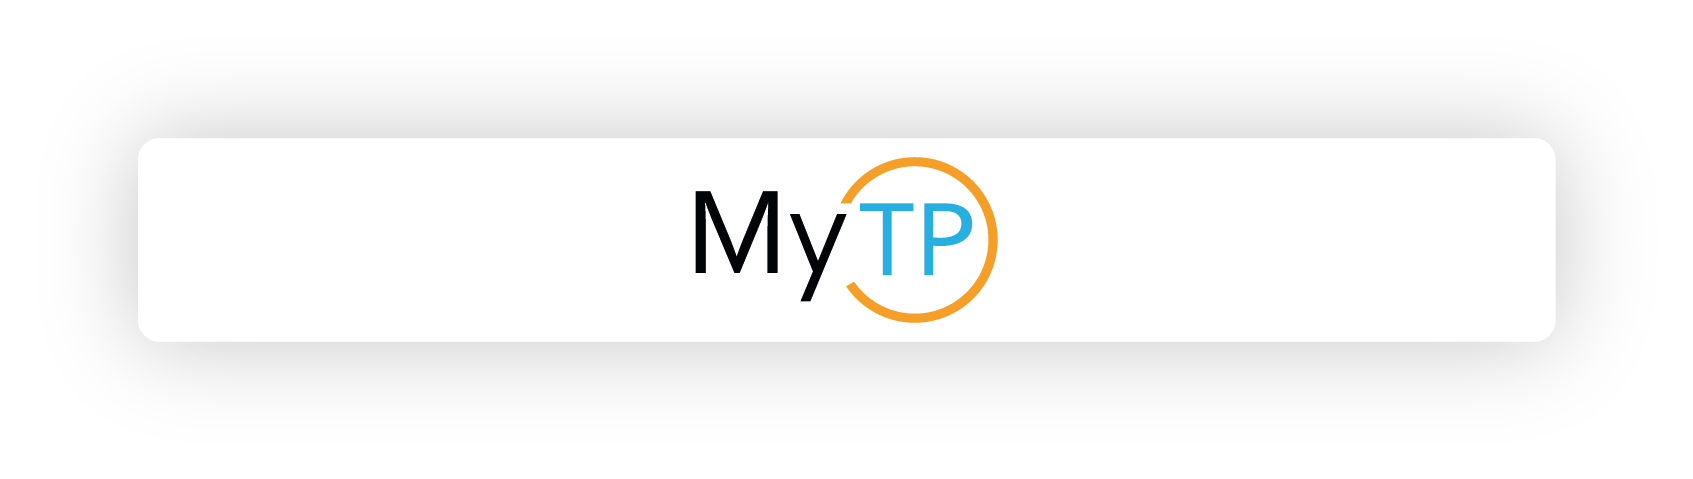 MyTP koppeling